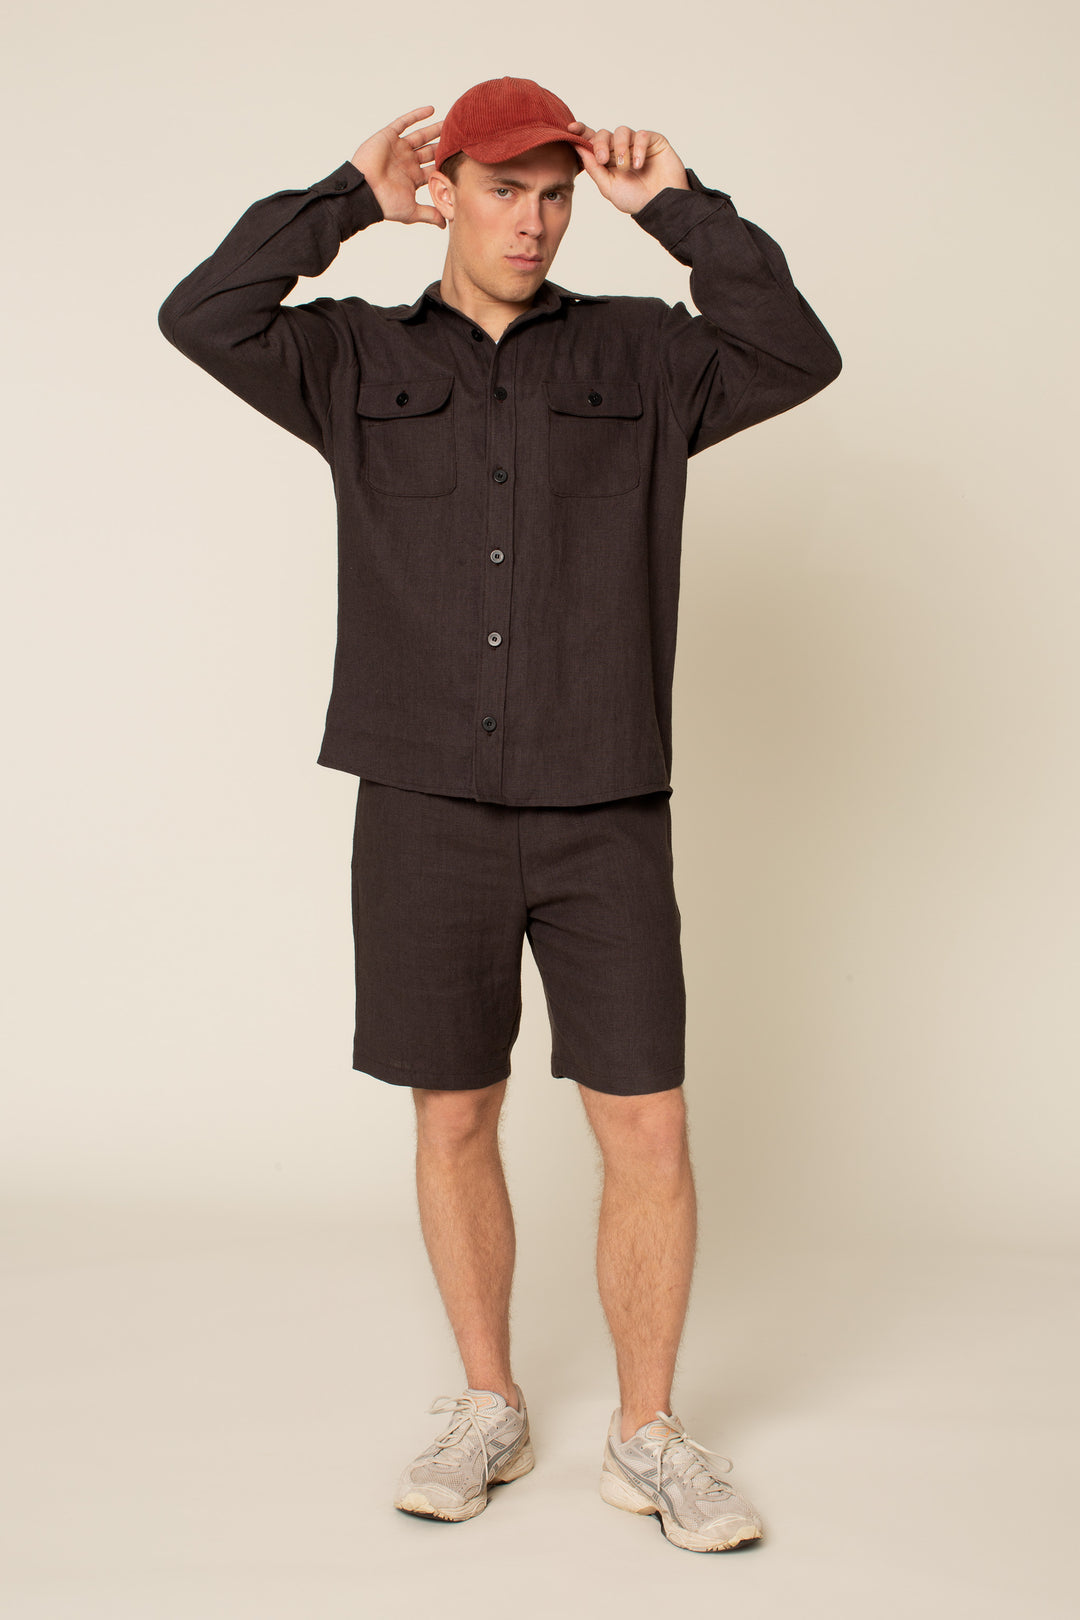 Heavy shirt sewing pattern- Men's Sizes 2XS-4XL